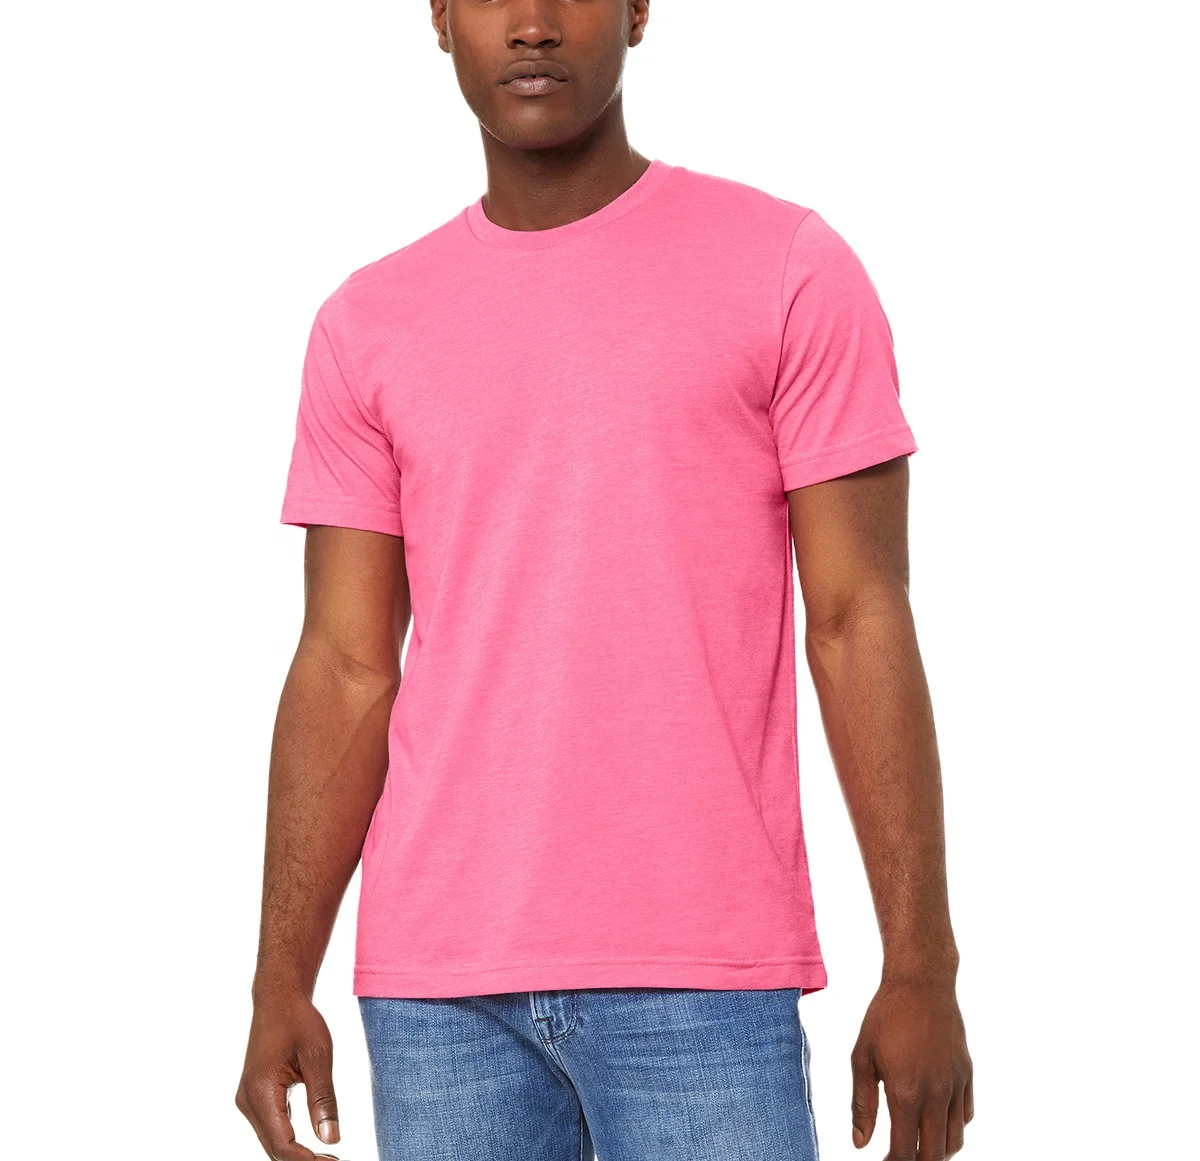 Source OEM cotton Tshirt Manufacturer blank t-shirts custom graphic printing men t m.alibaba.com